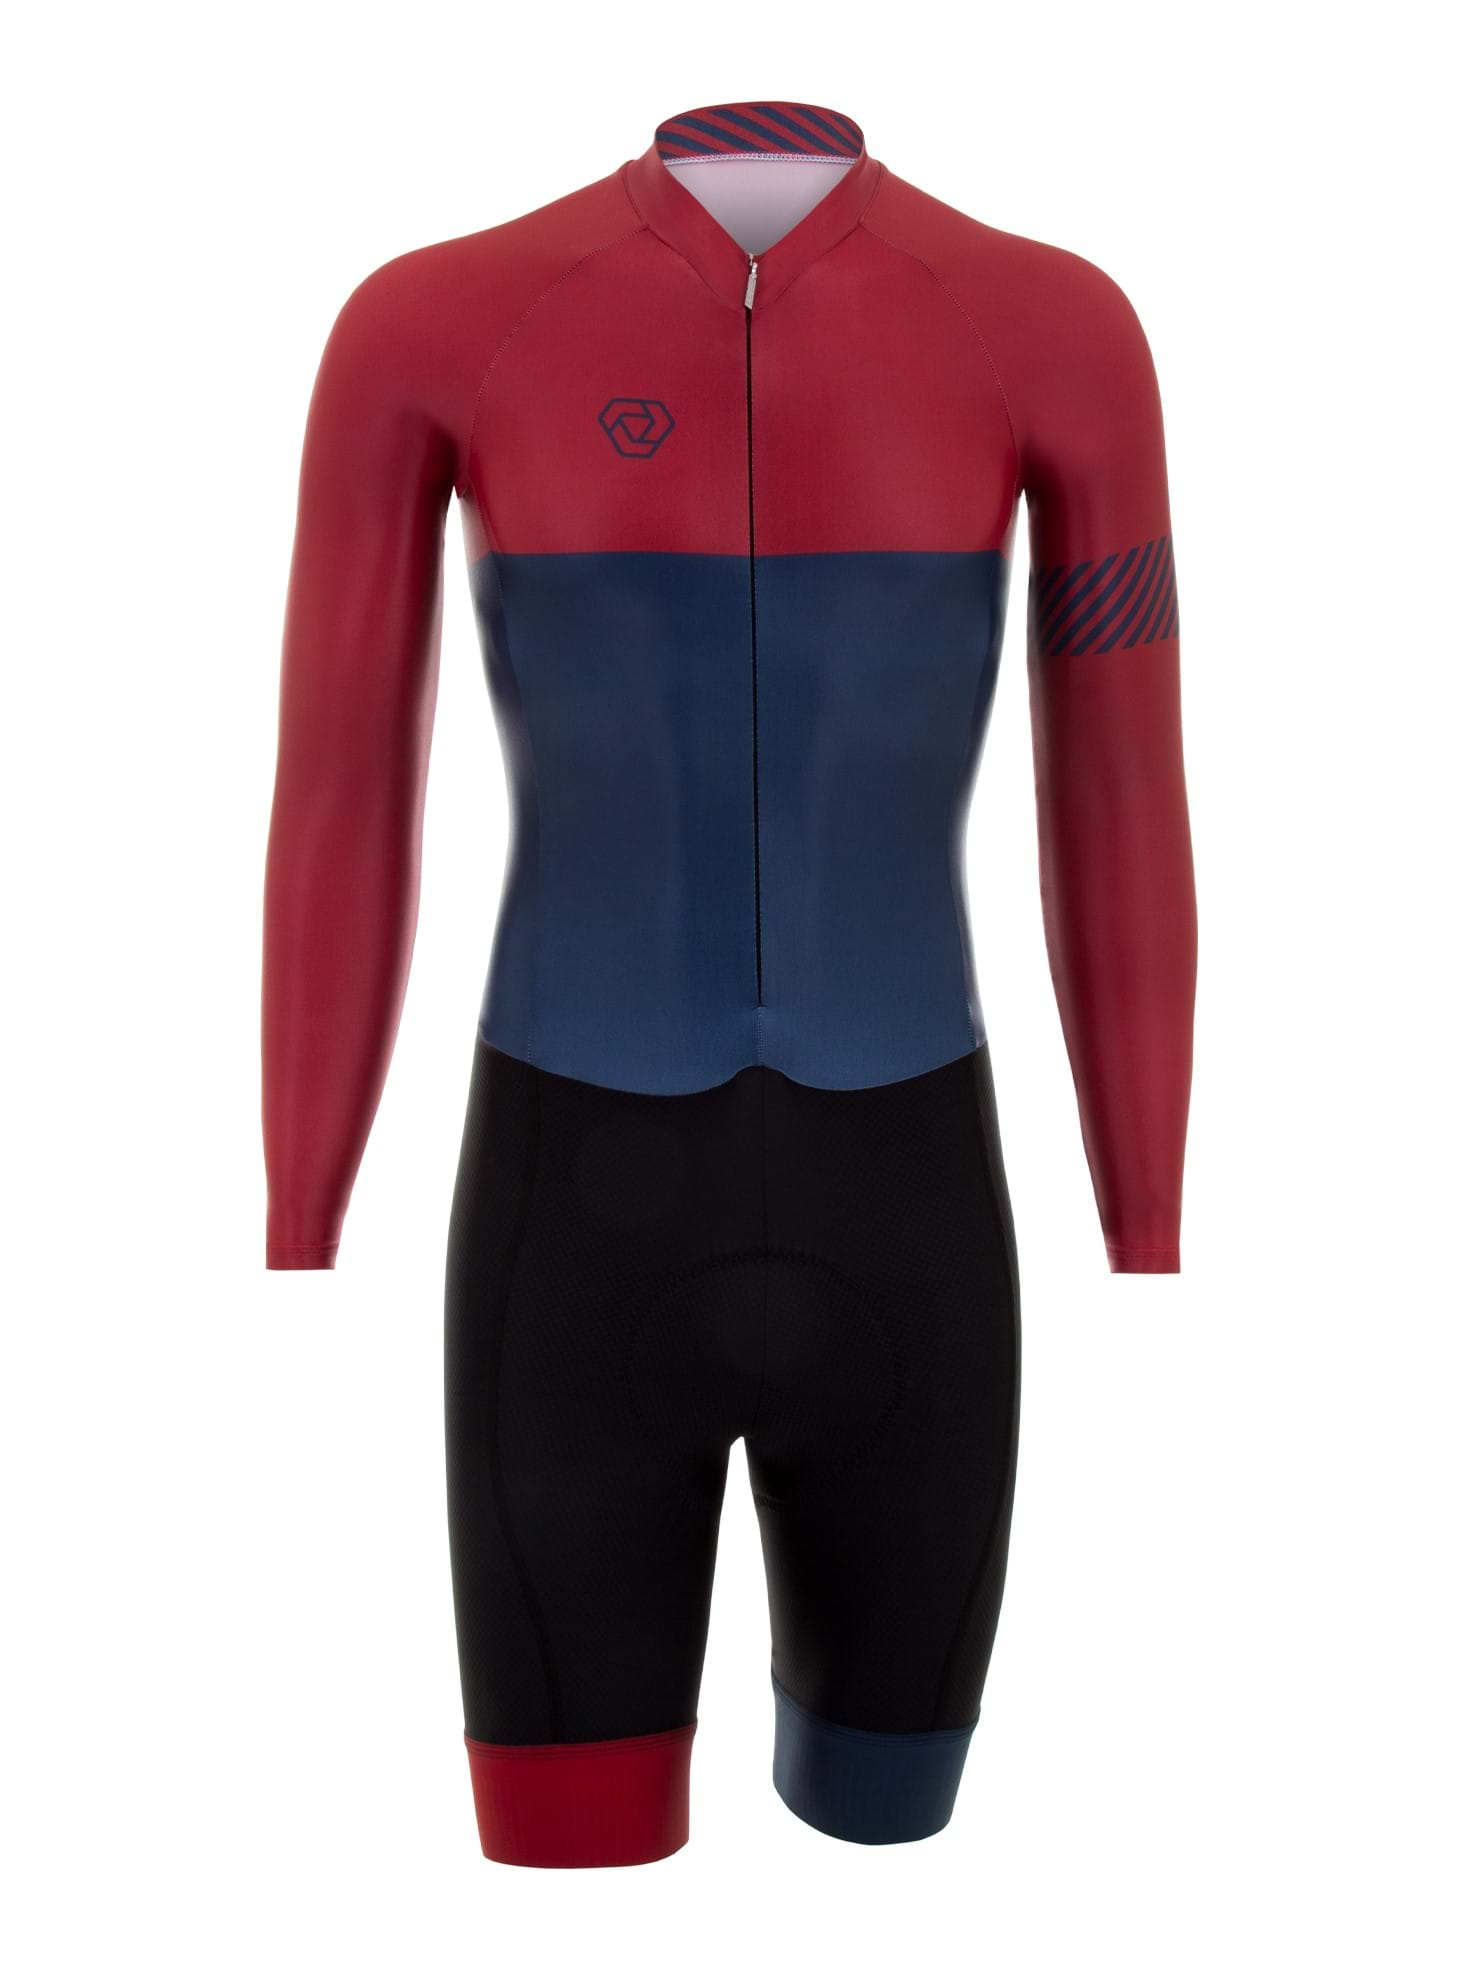 Verge Sport Classic Speedsuit Long Sleeve Cycling Race Skinsuit